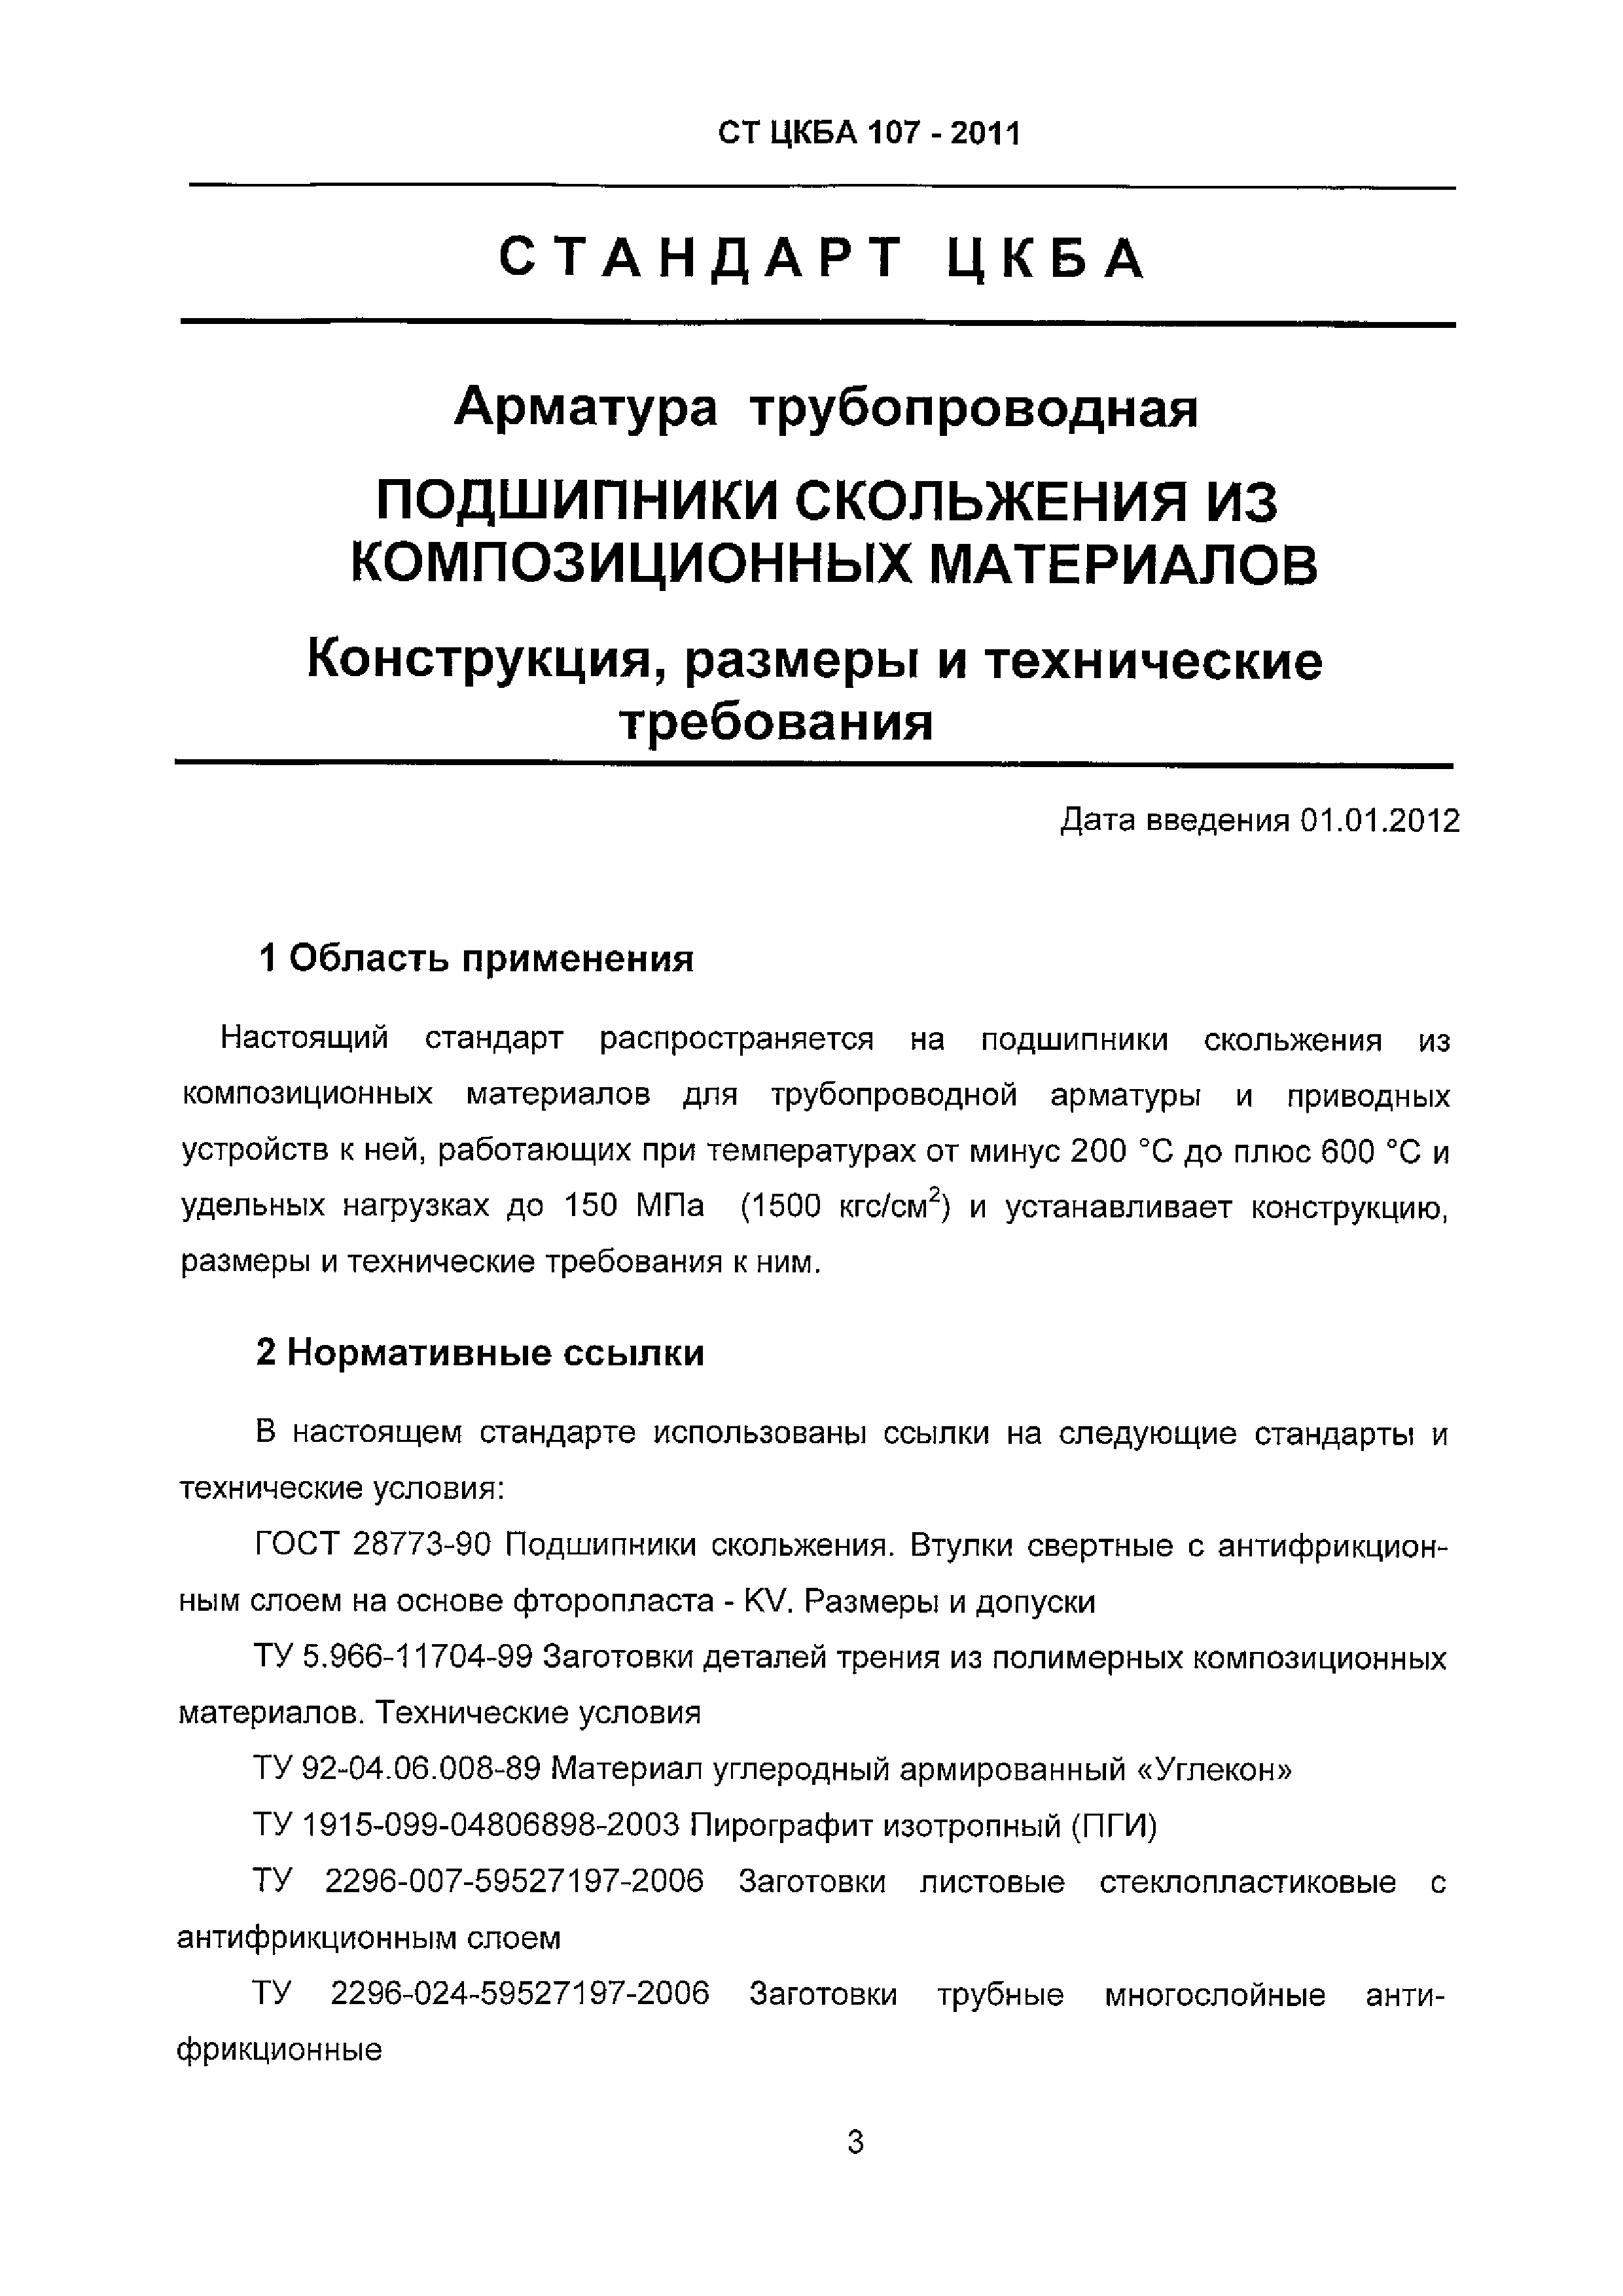 СТ ЦКБА 107-2011